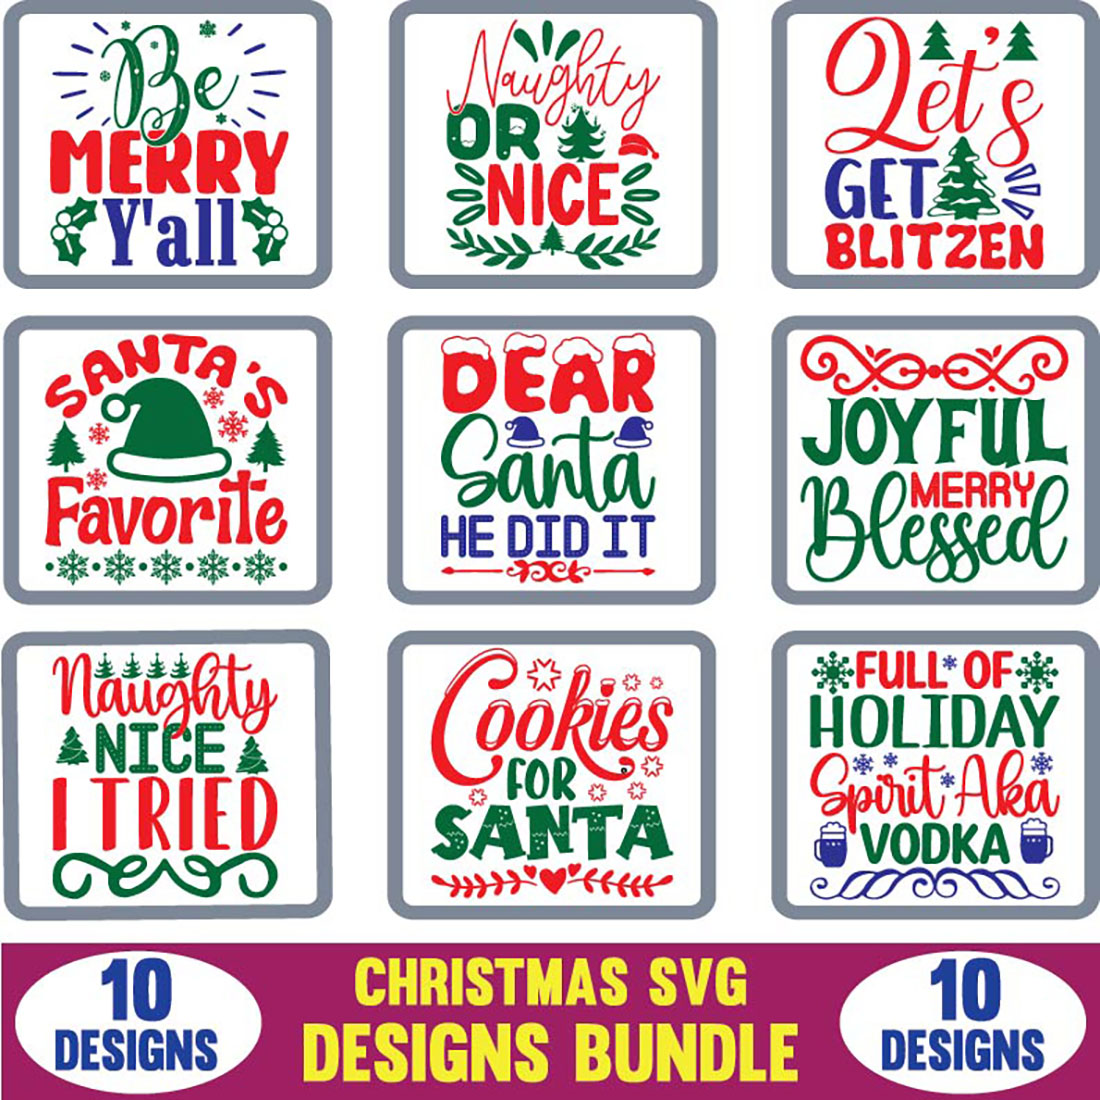 Christmas SVG Designs Bundle main cover.